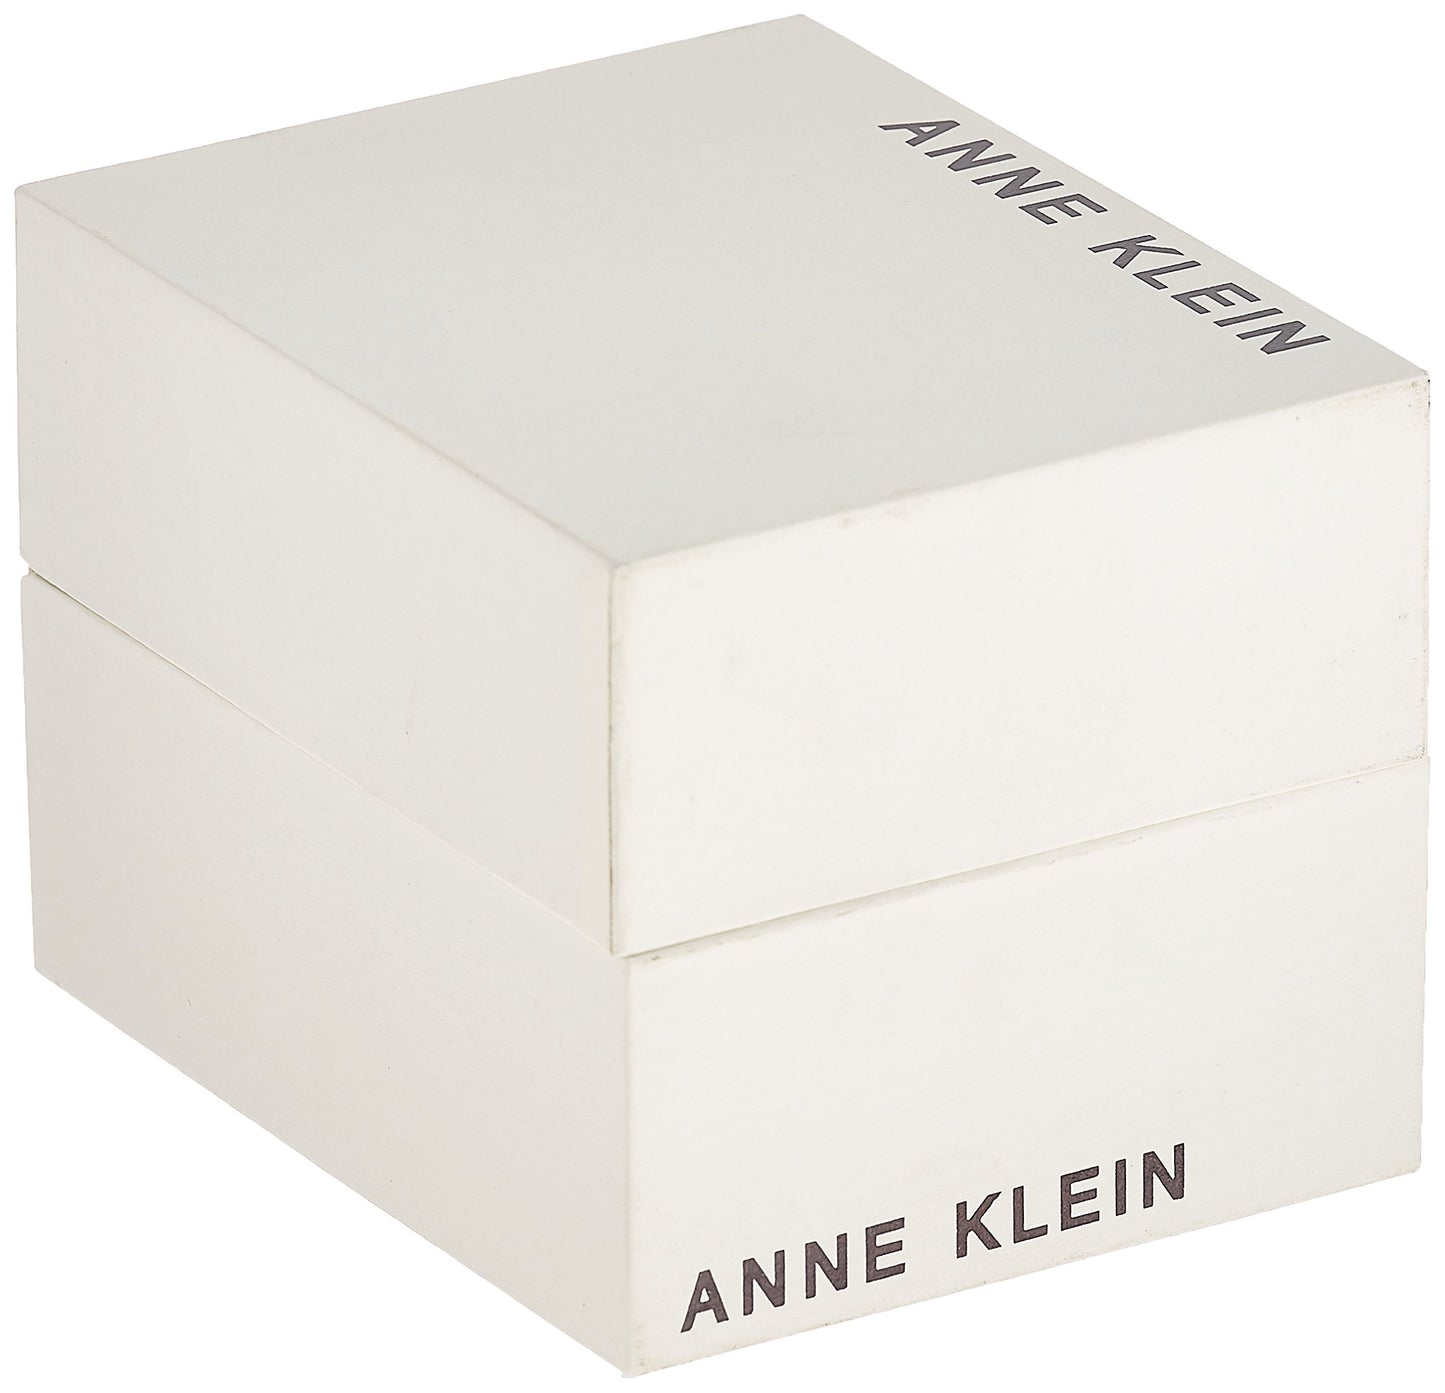 Anne Klein New York Analog Women's Watch - AK2631SVLPJ (Silver Dial Pink Colored Strap)